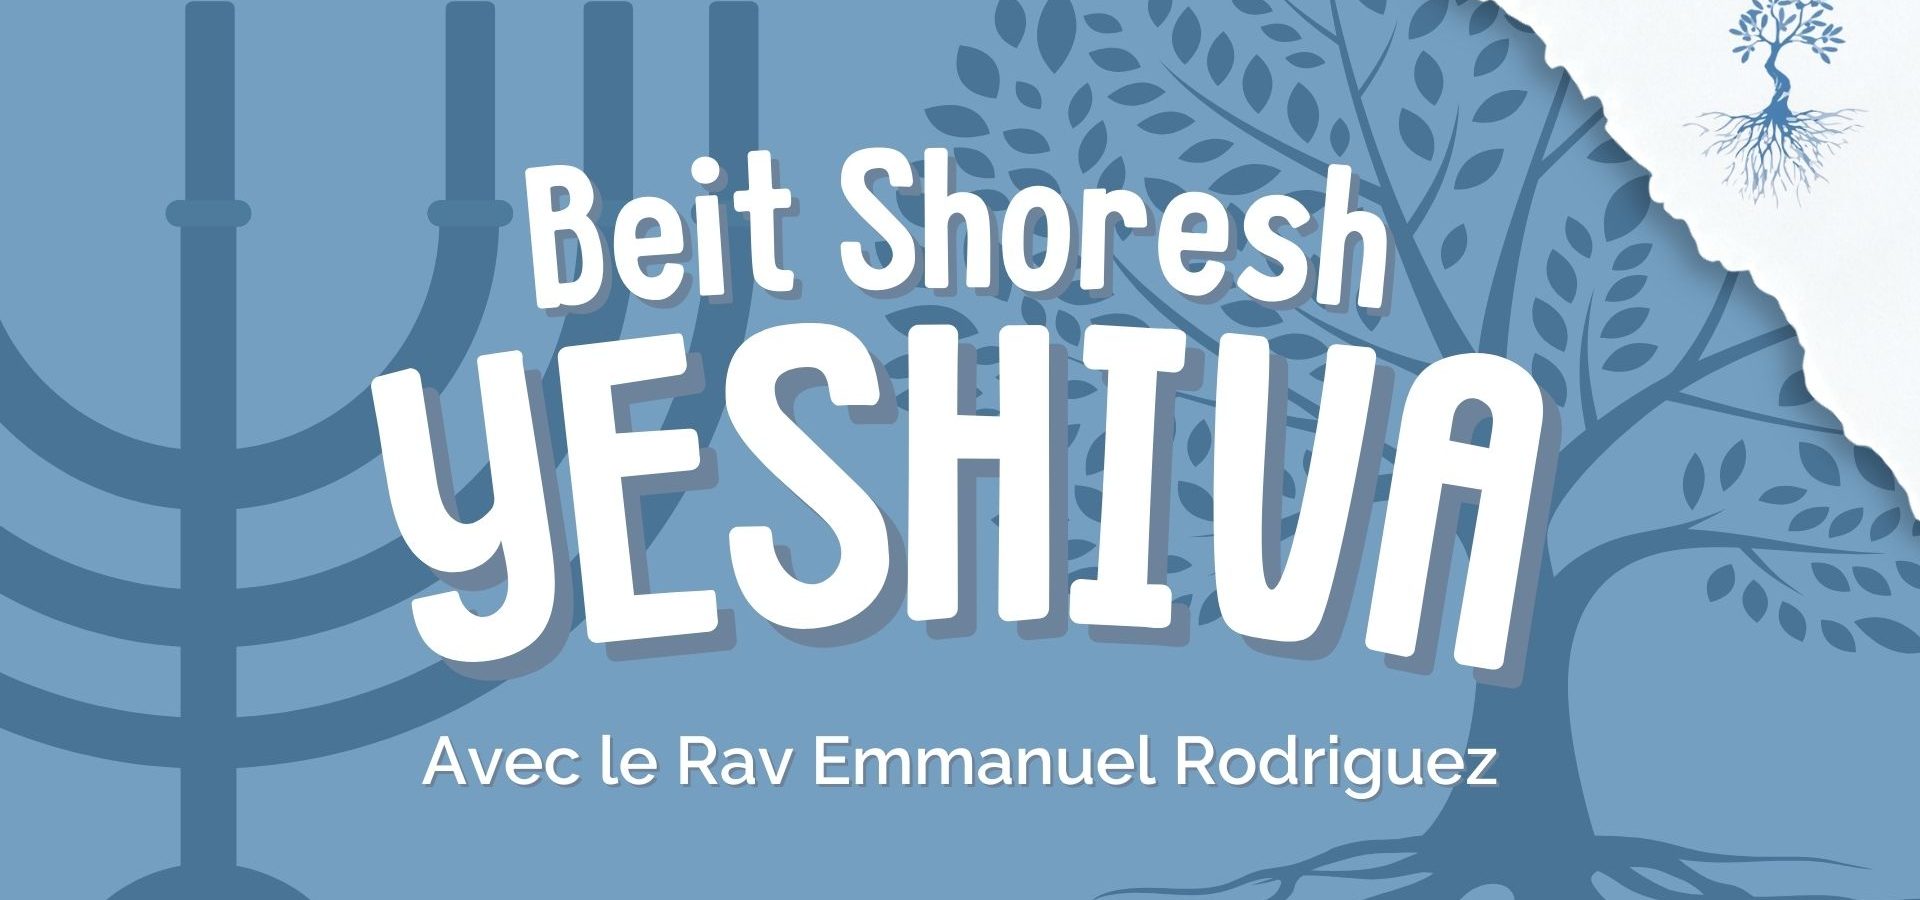 Miniature youtube de la yeshiva de Beit Shoresh